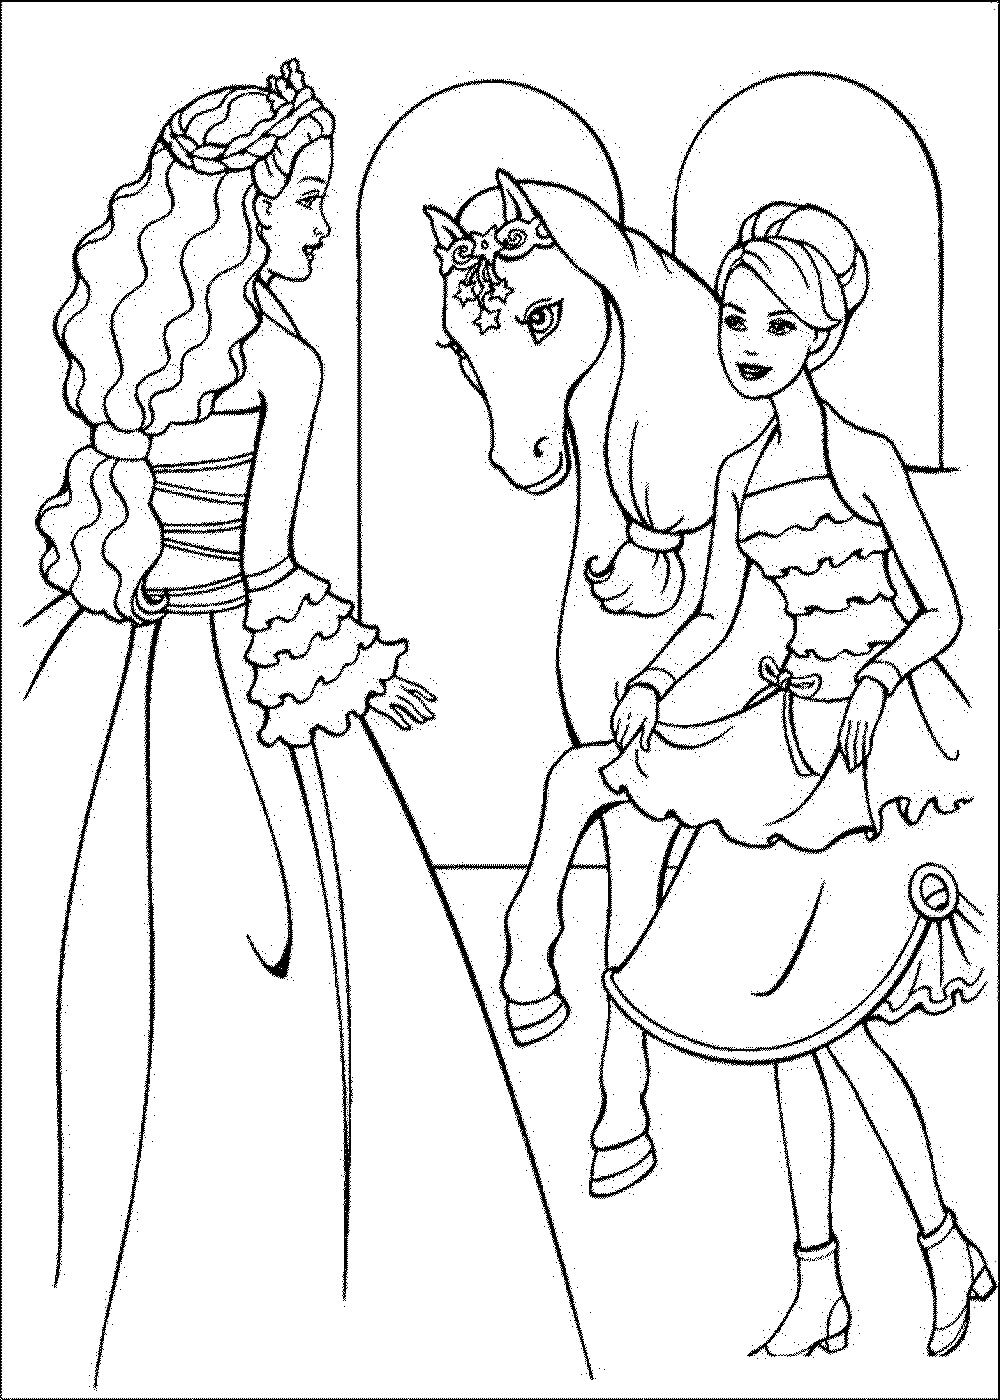 Раскраска барби 4. Раскраски Барби принцесса и нищенка. Кукла Барби принцесса раскраска. Раскраски для девочек Барби. Раскраски для девочек принцессы.